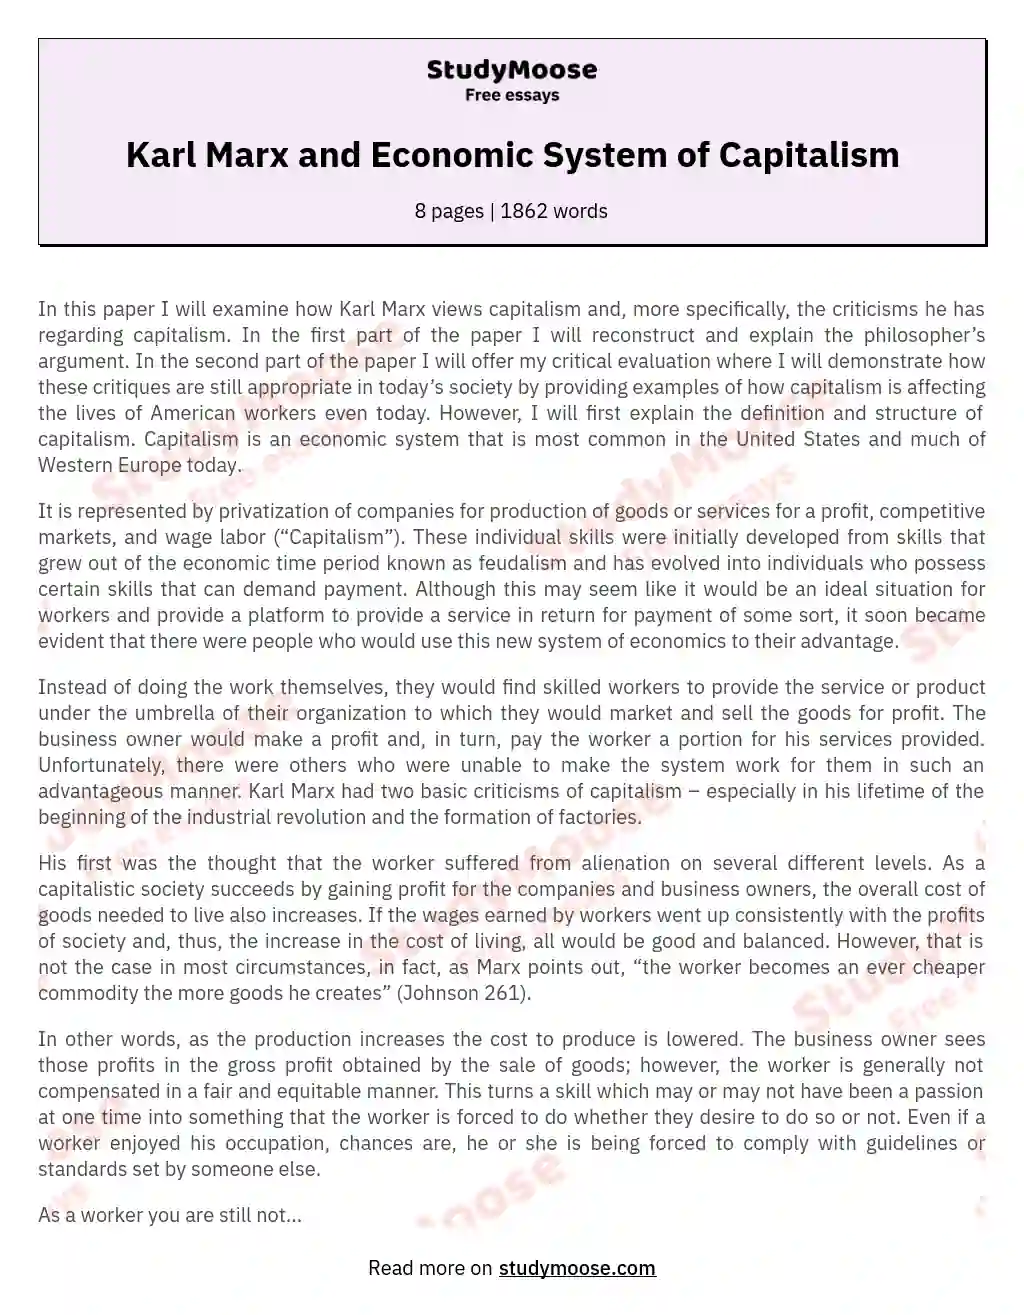 Karl Marx and Economic System of Capitalism essay